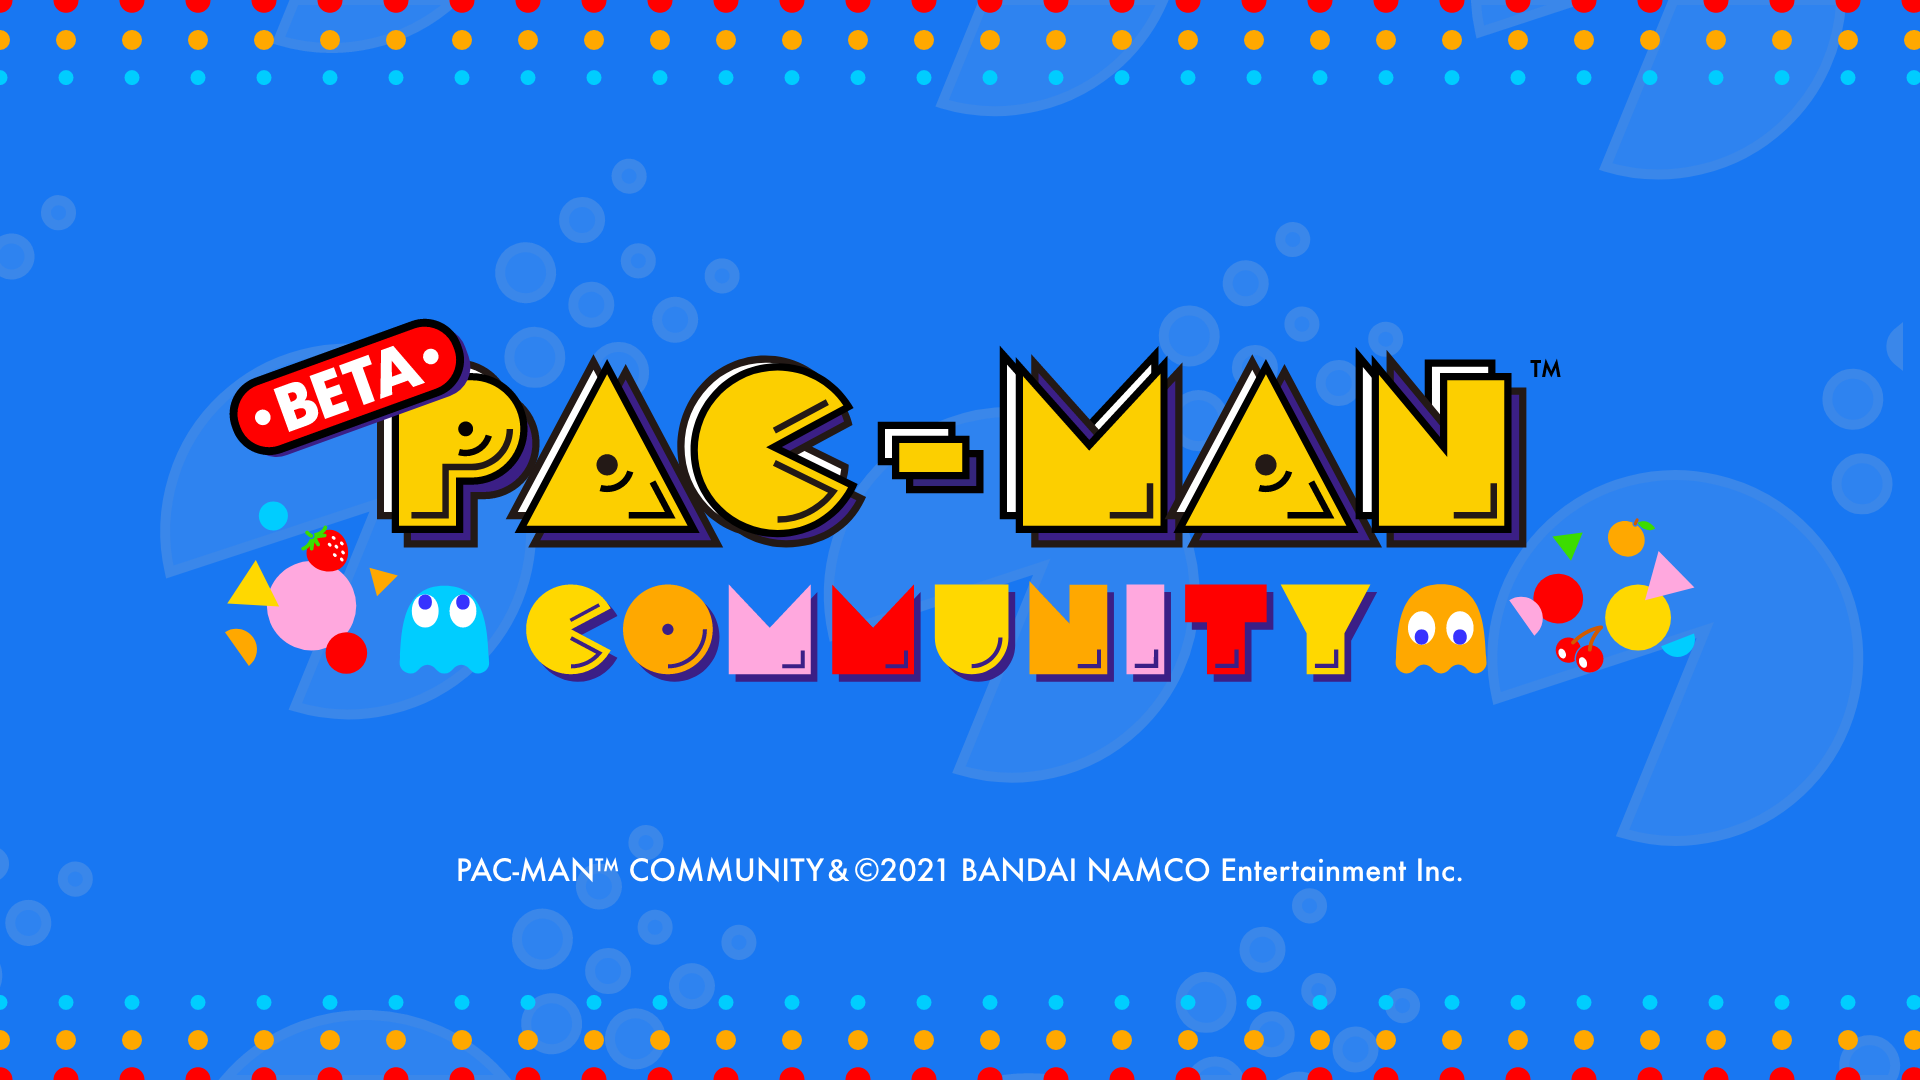 PAC-MAN 99 Surpasses Four Million Downloads, New Content On The